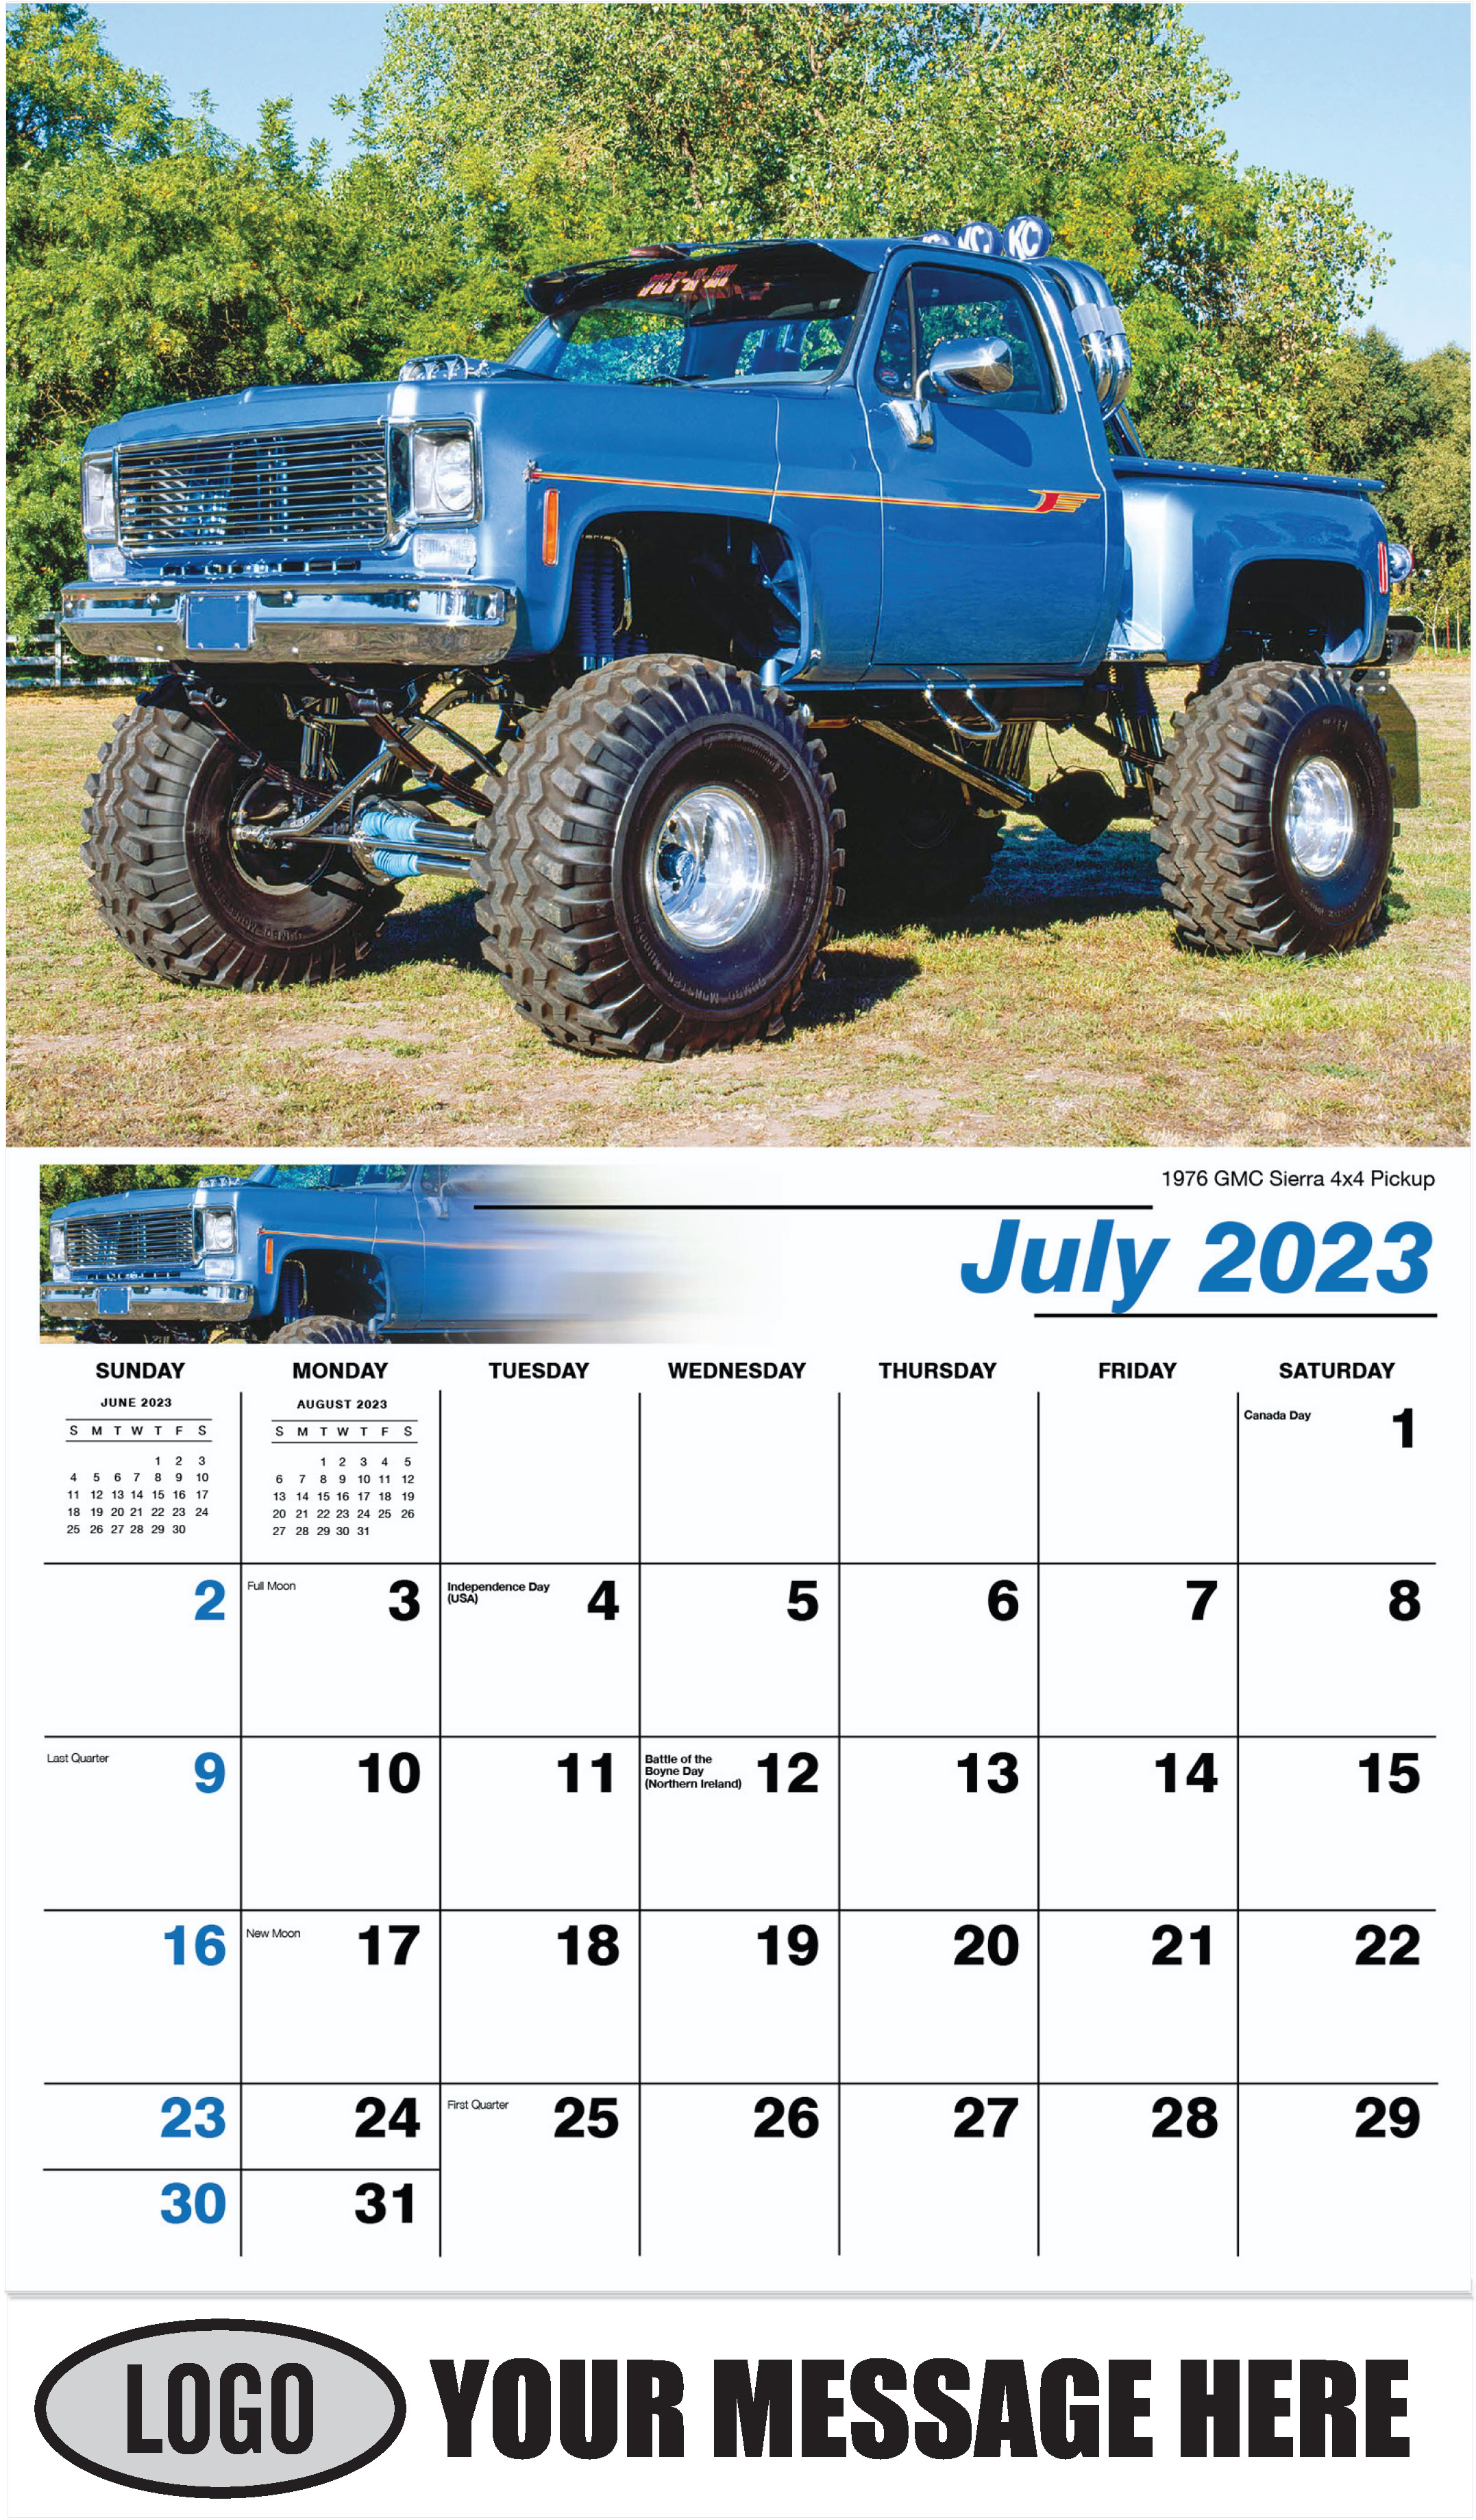 1976 GMC 4x4 Pickup Truck - July - Pumped Up Pickups 2023 Promotional Calendar